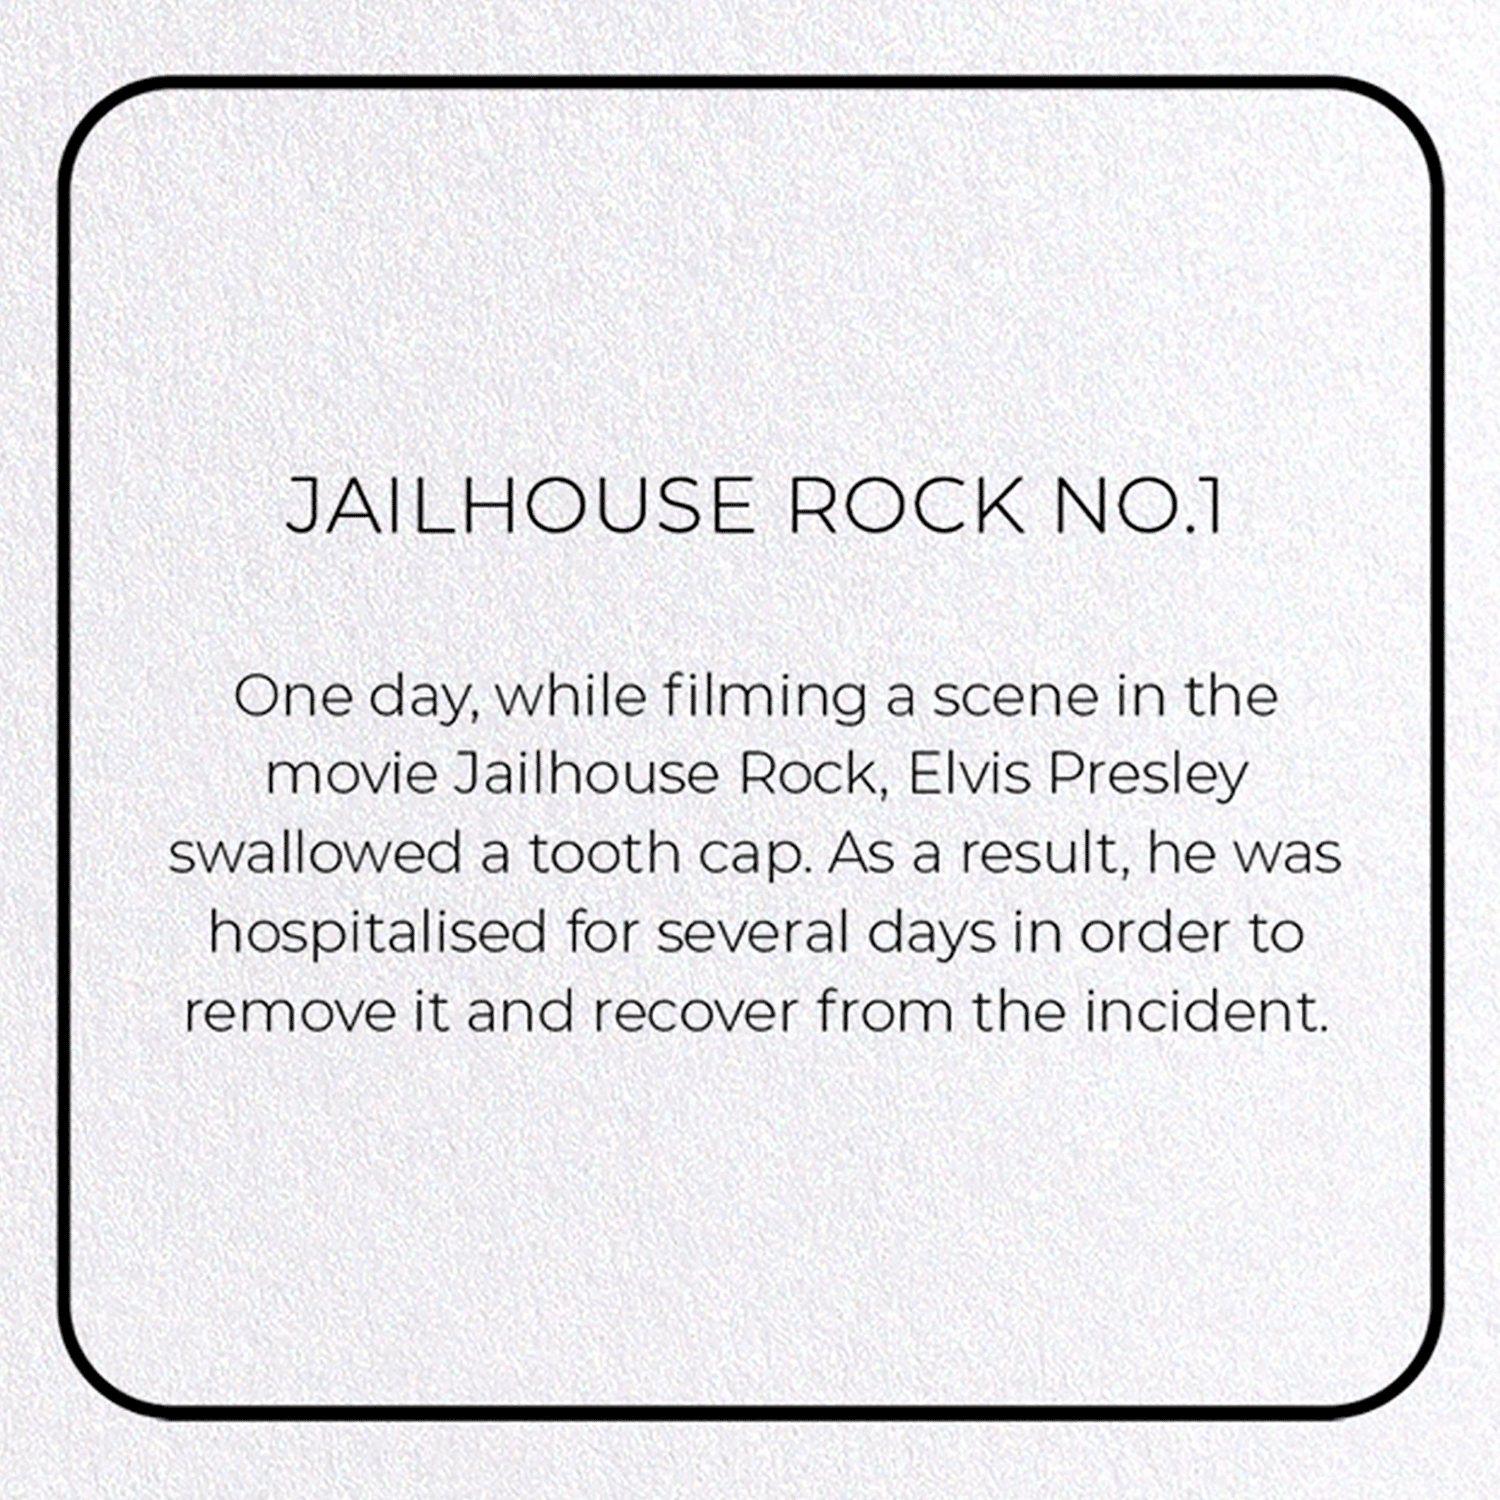 JAILHOUSE ROCK NO.1